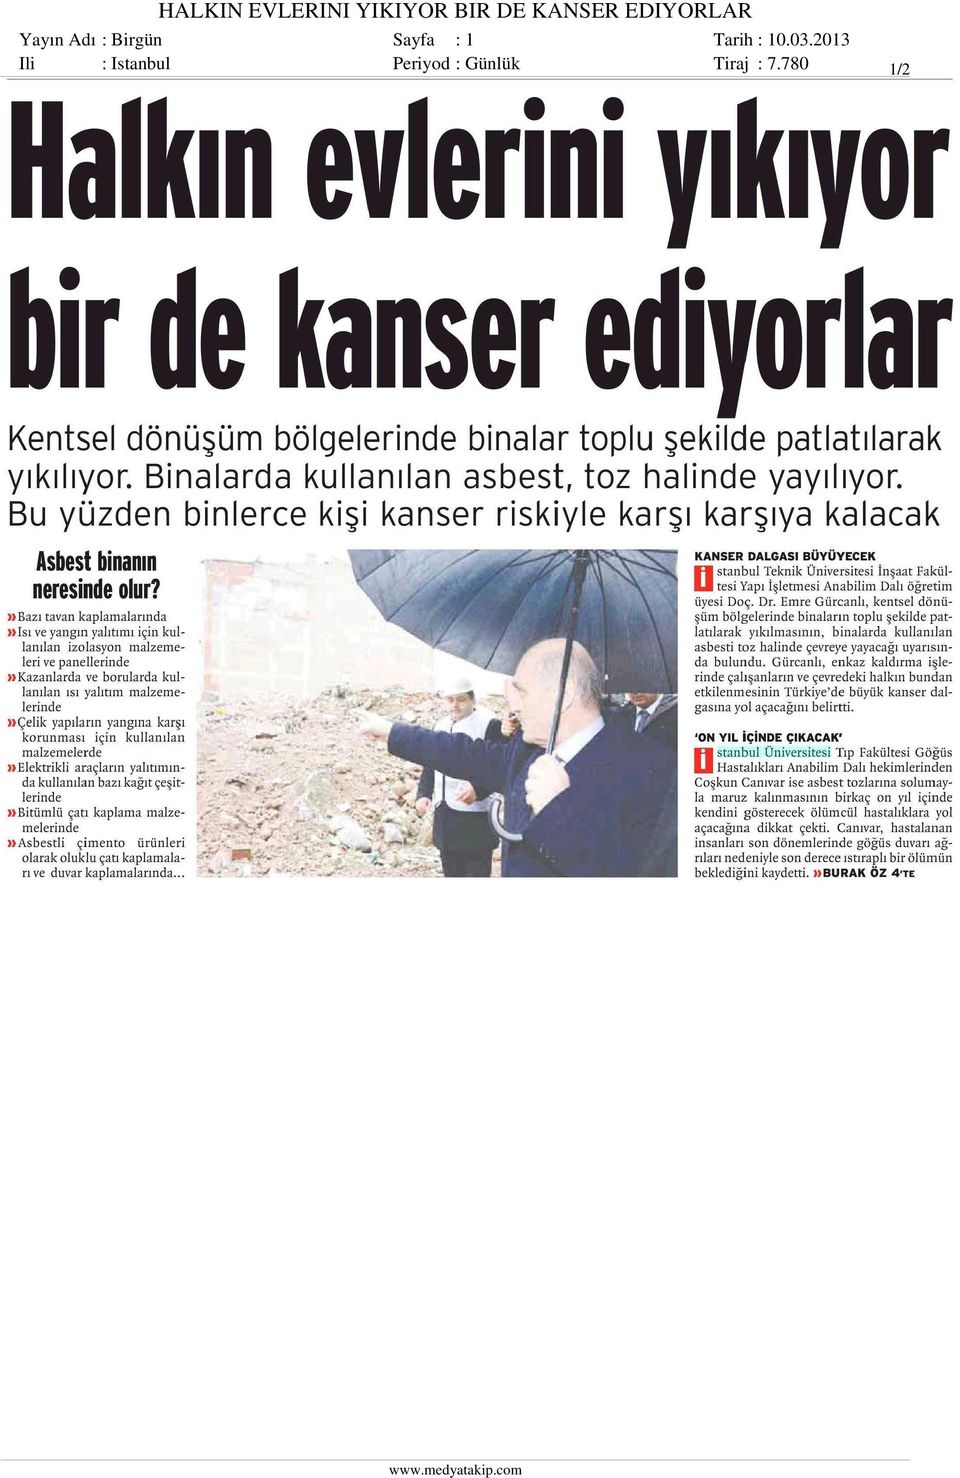 Birgün Sayfa : 1 Ili : Istanbul